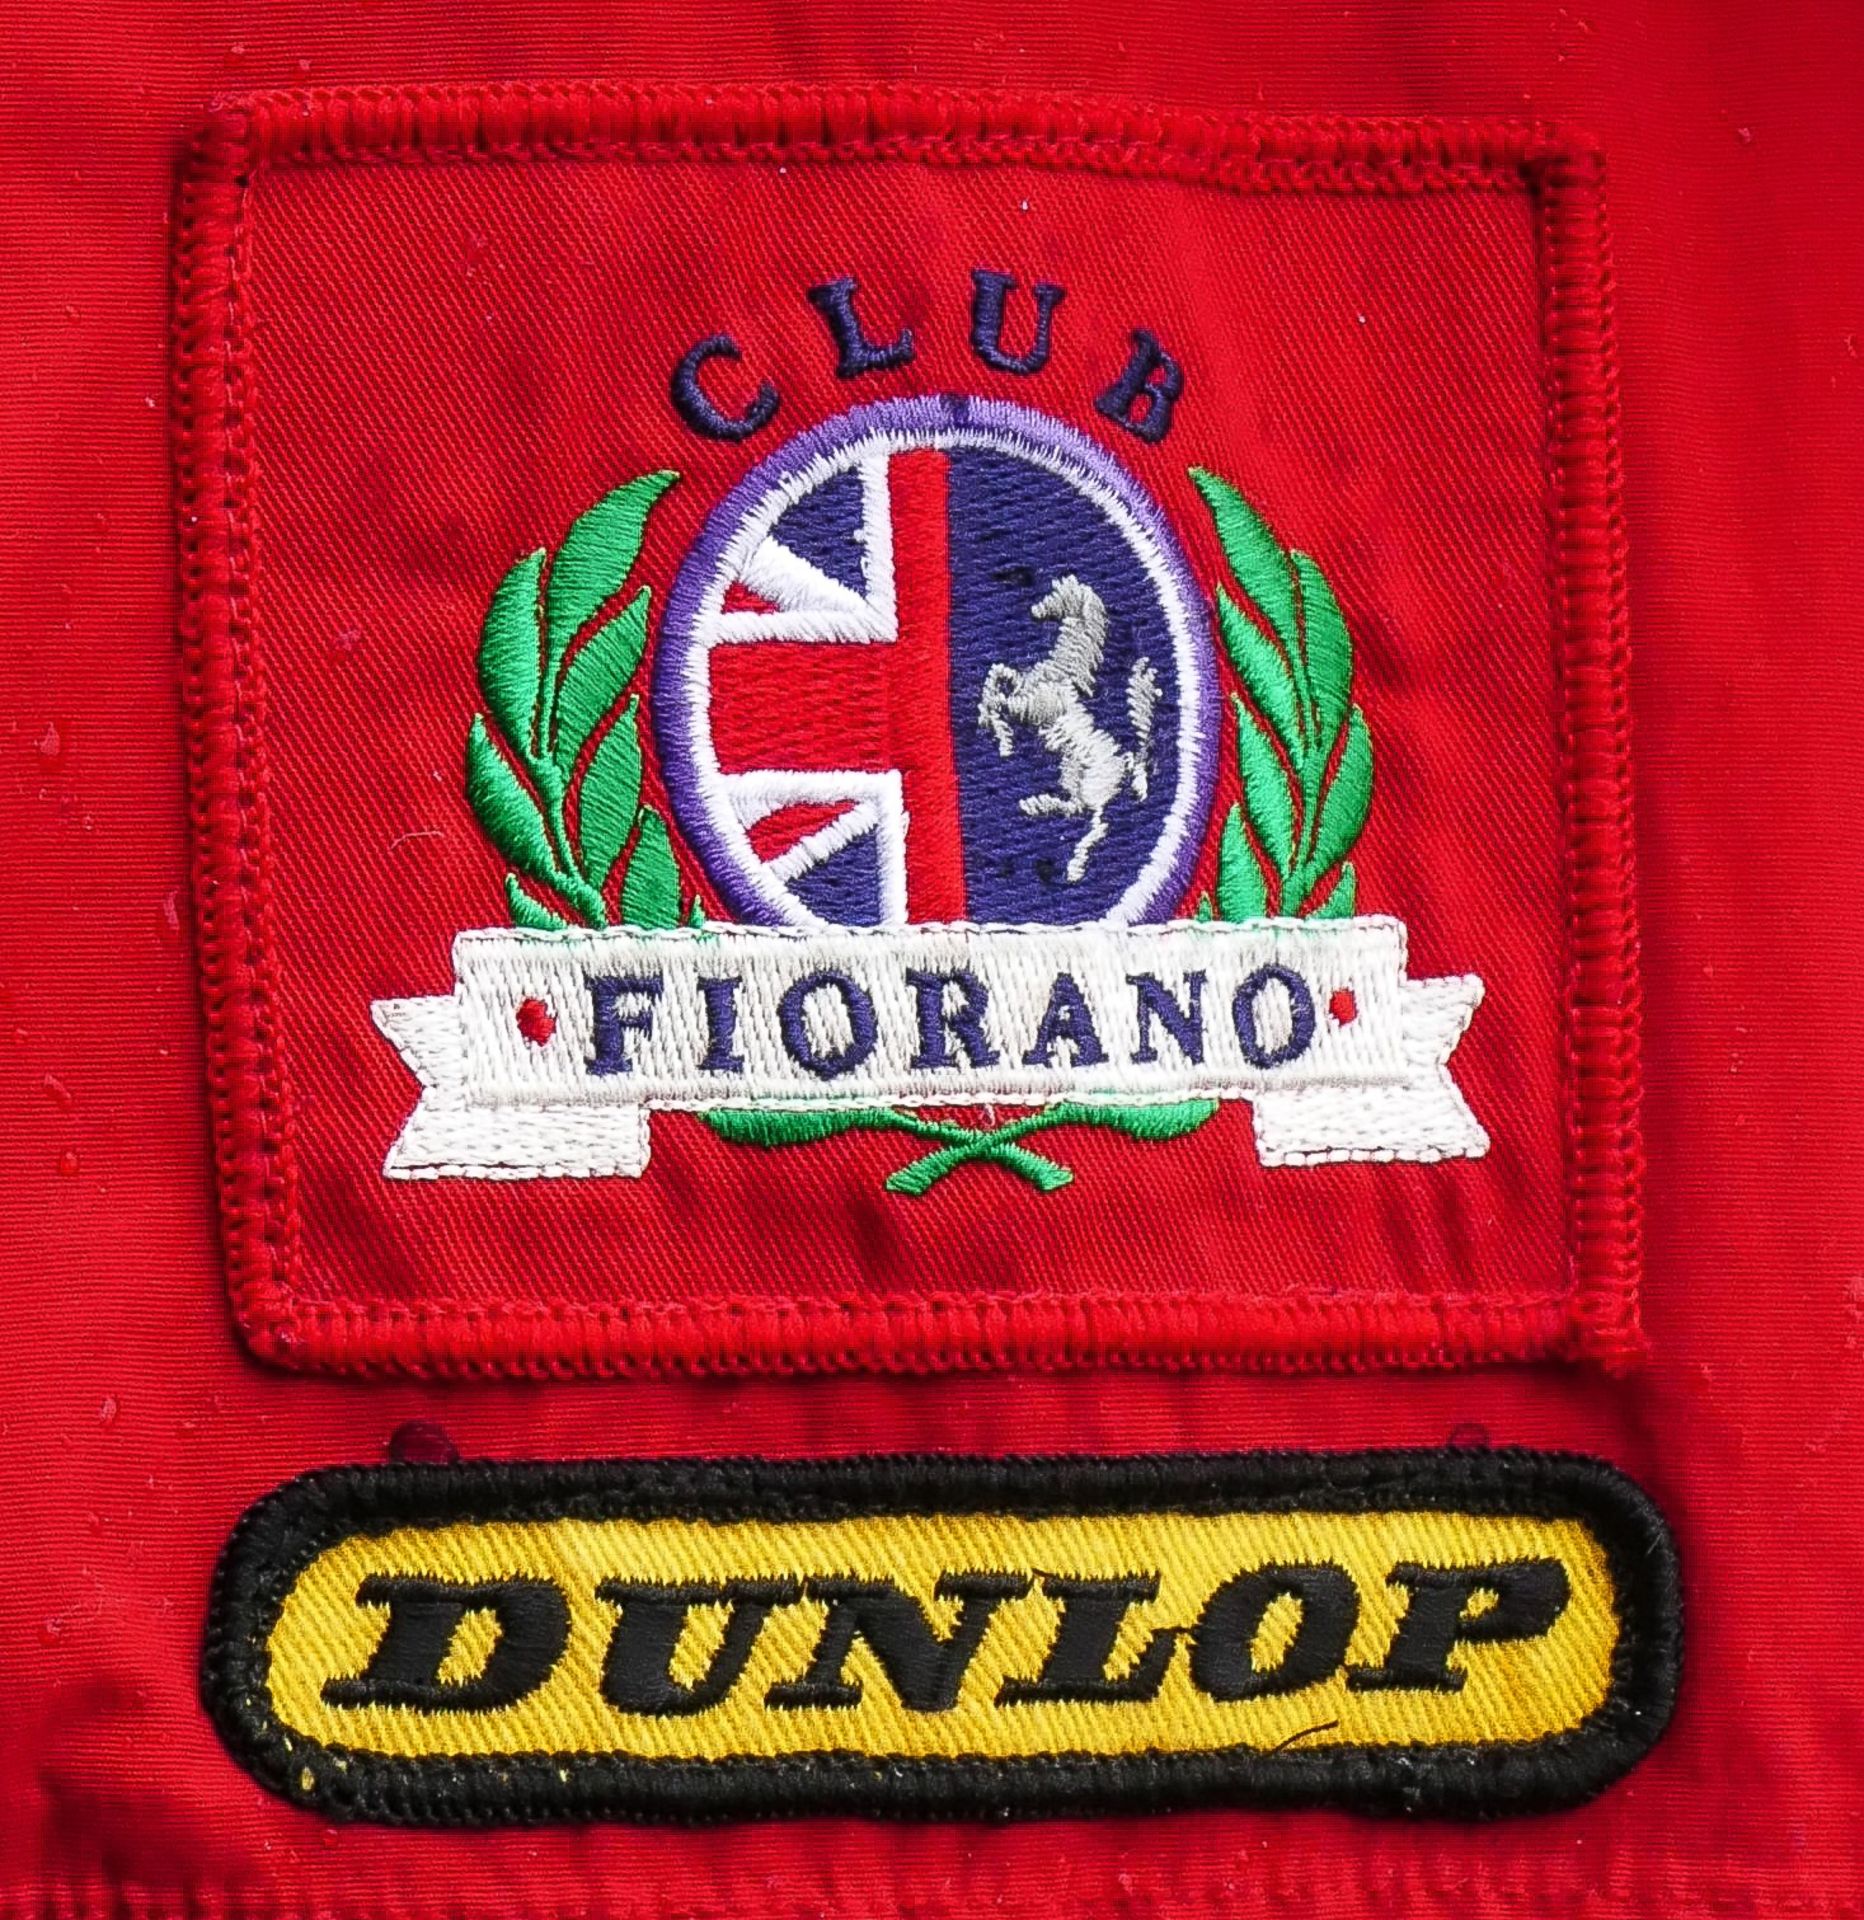 Ferrari Veloqx Motorsport/Team Maranello Concessionaires team jacket, size XL, as worn during the - Image 10 of 11